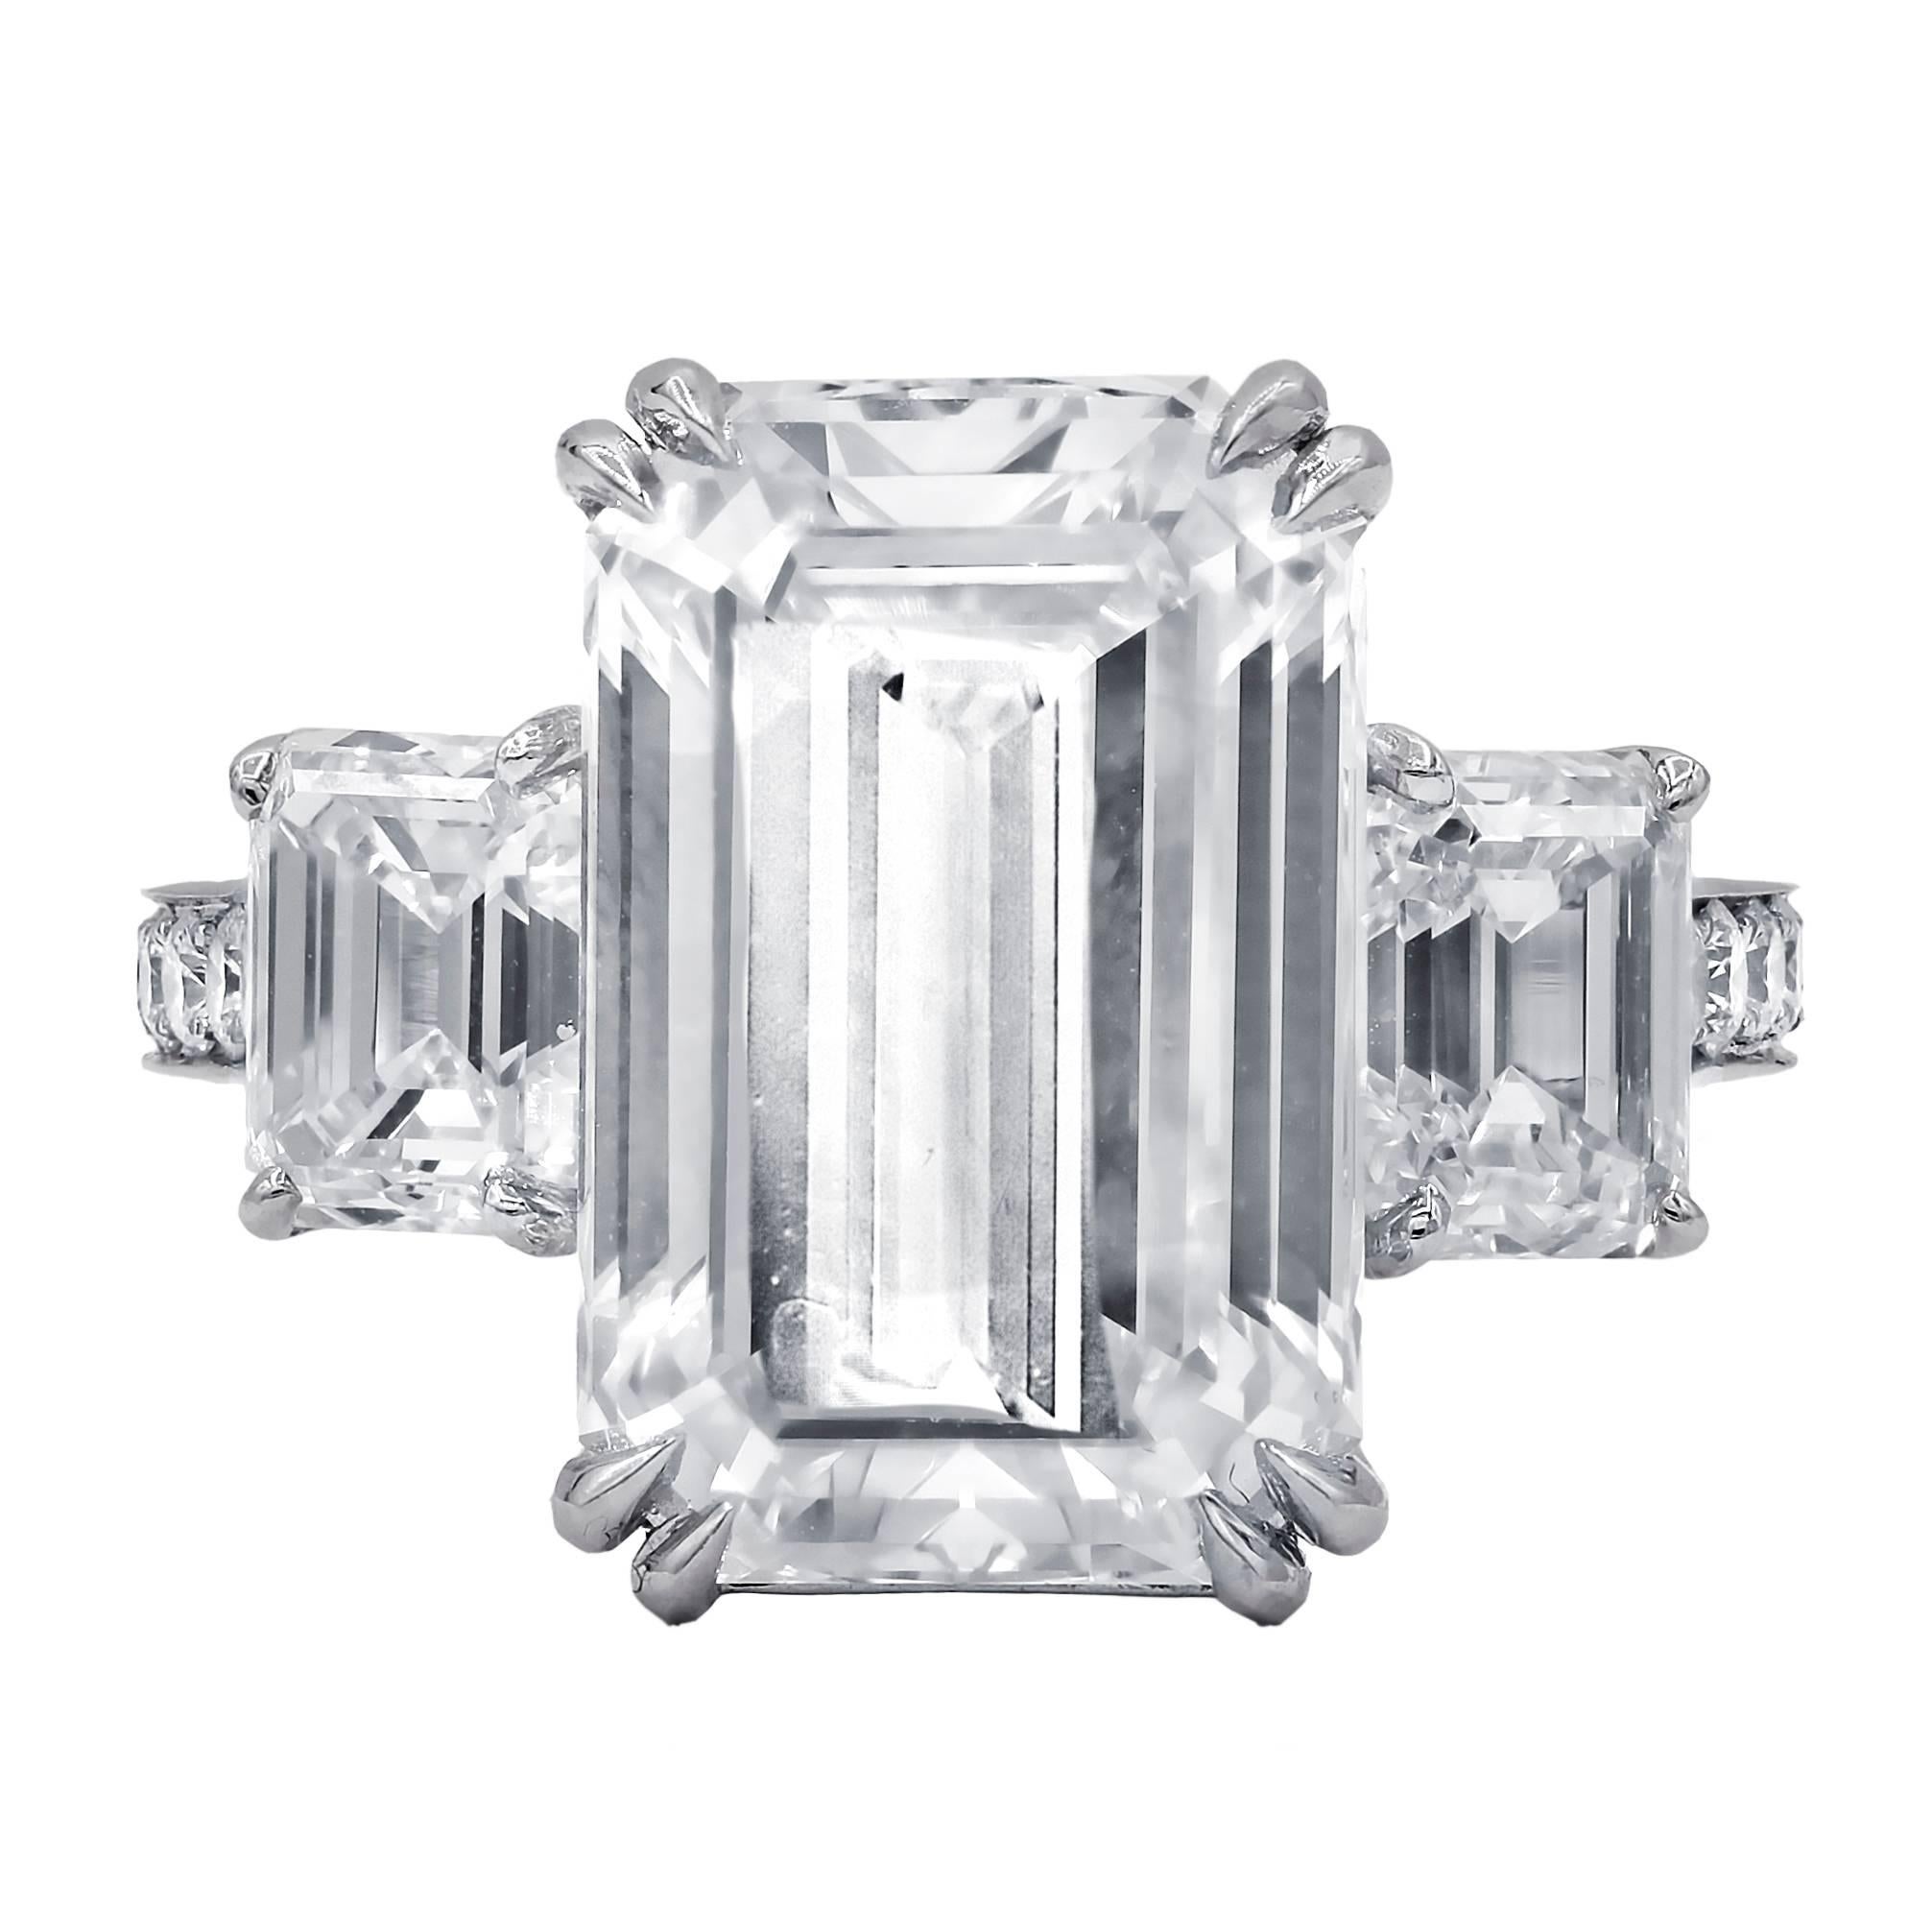 Spectacular GIA 9.38 I-VVS2 Emerald Cut Diamond Ring